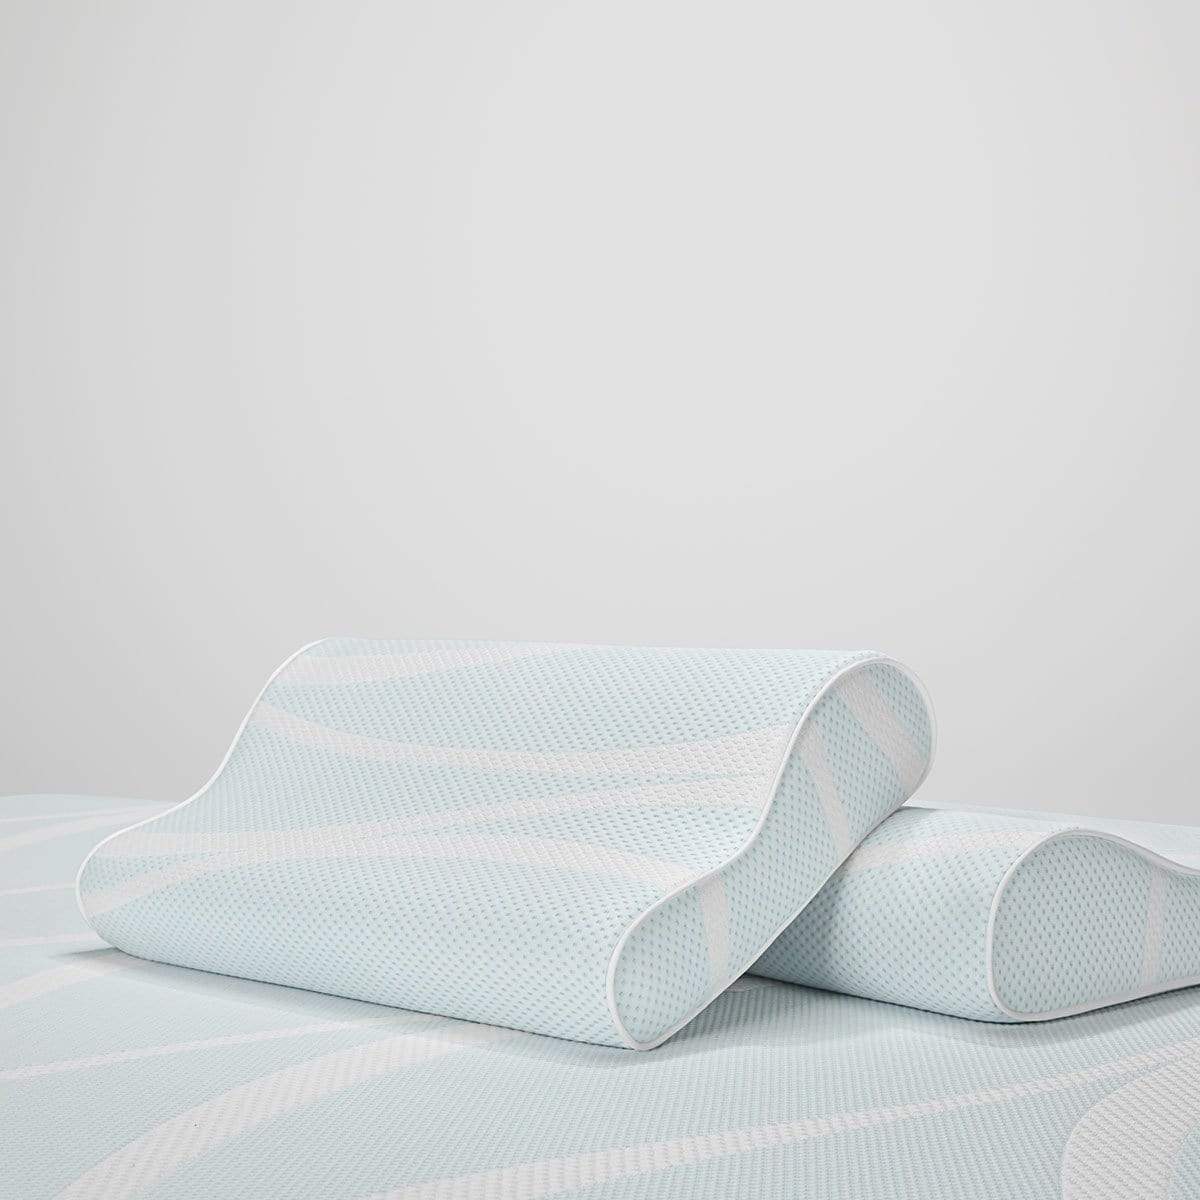 TEMPUR-Breeze Cooling Neck Pillows by TEMPUR-Pedic Side View on a mattress